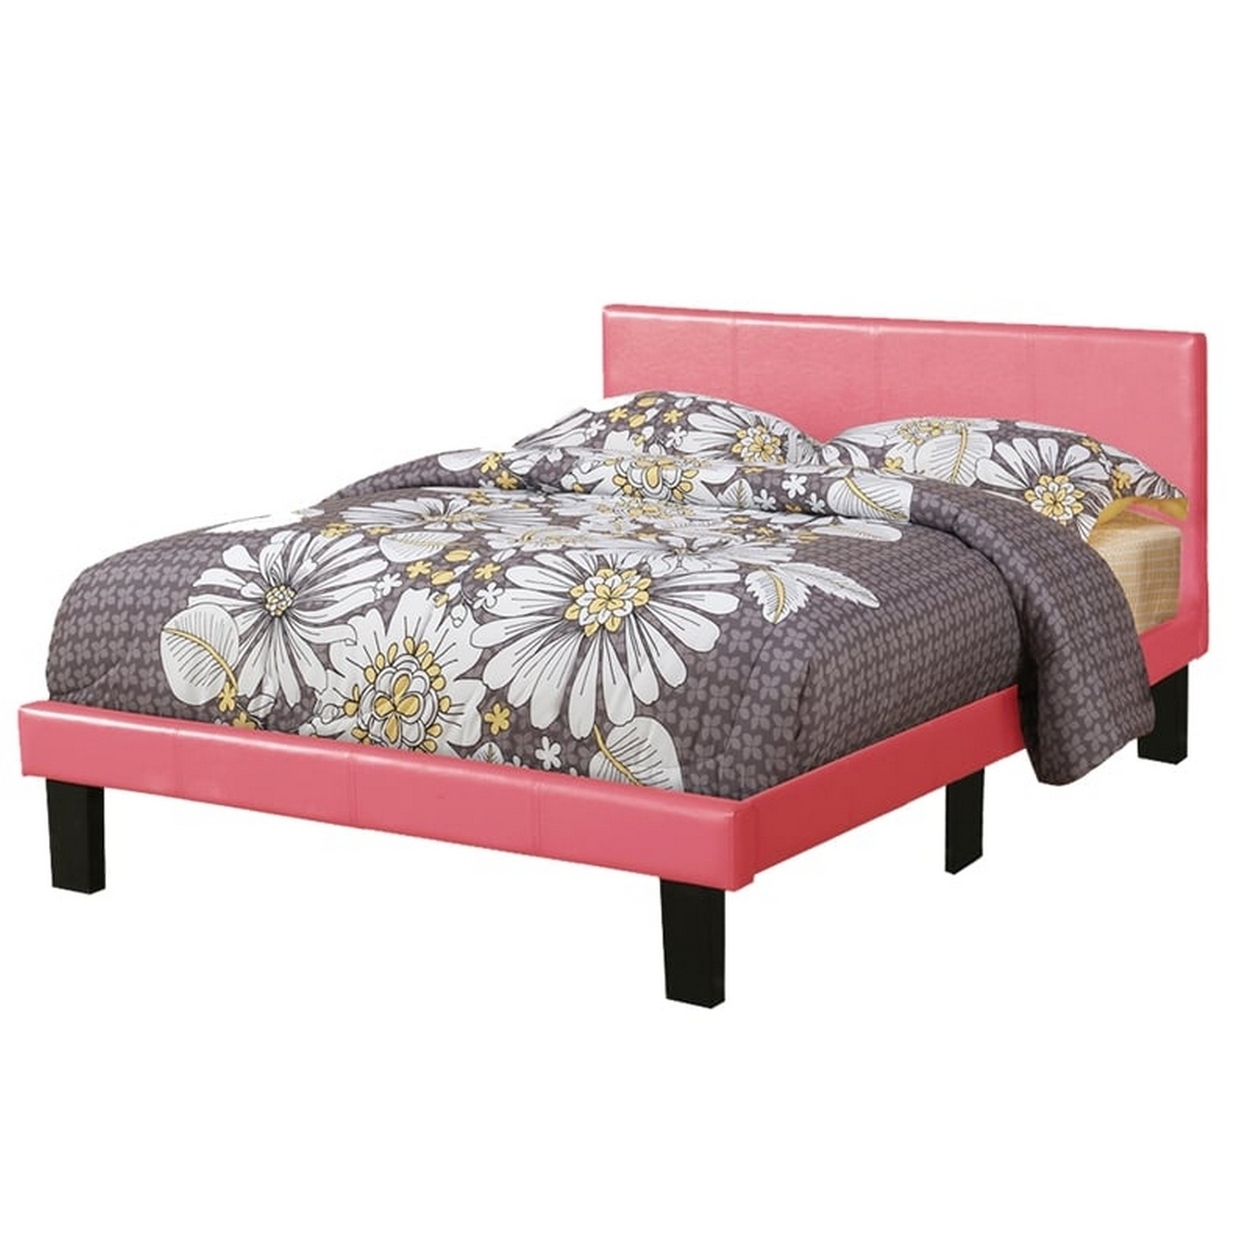 Modern Twin Size Bed, Upholstered Headboard, Metal Legs, Pink Faux Leather- Saltoro Sherpi